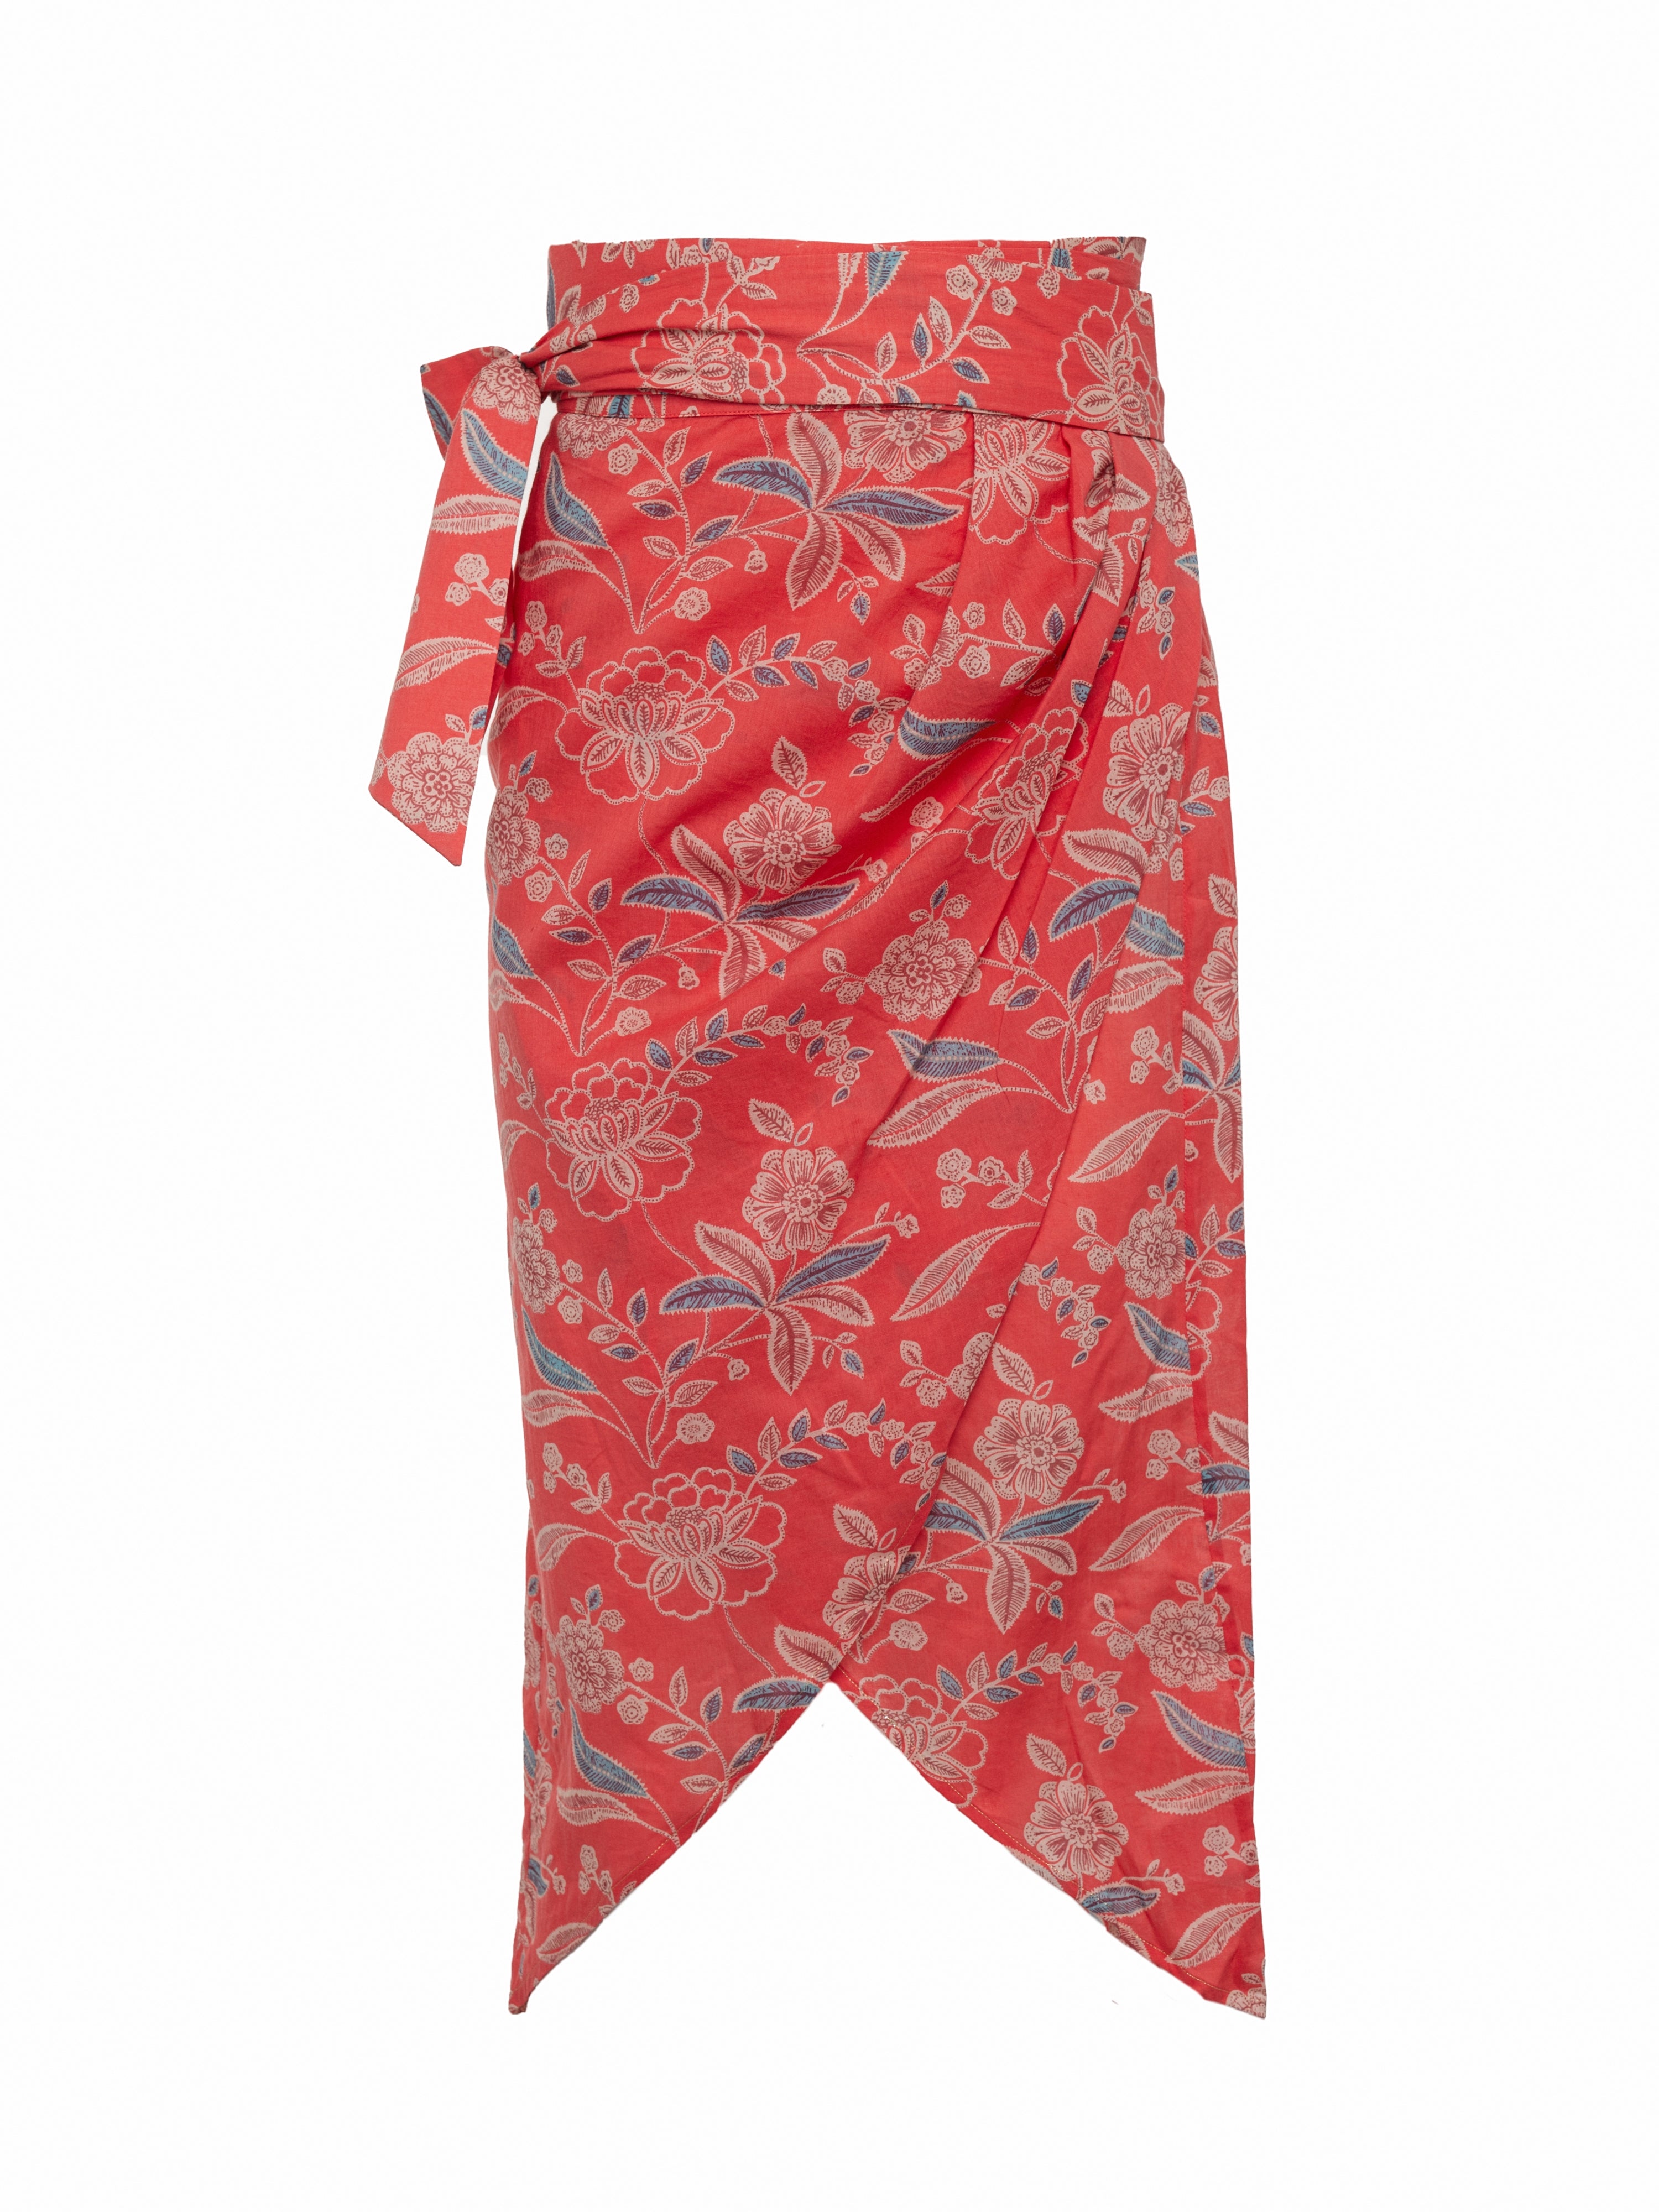 Mai Sarong Skirt - Red Floral by Desert Queen